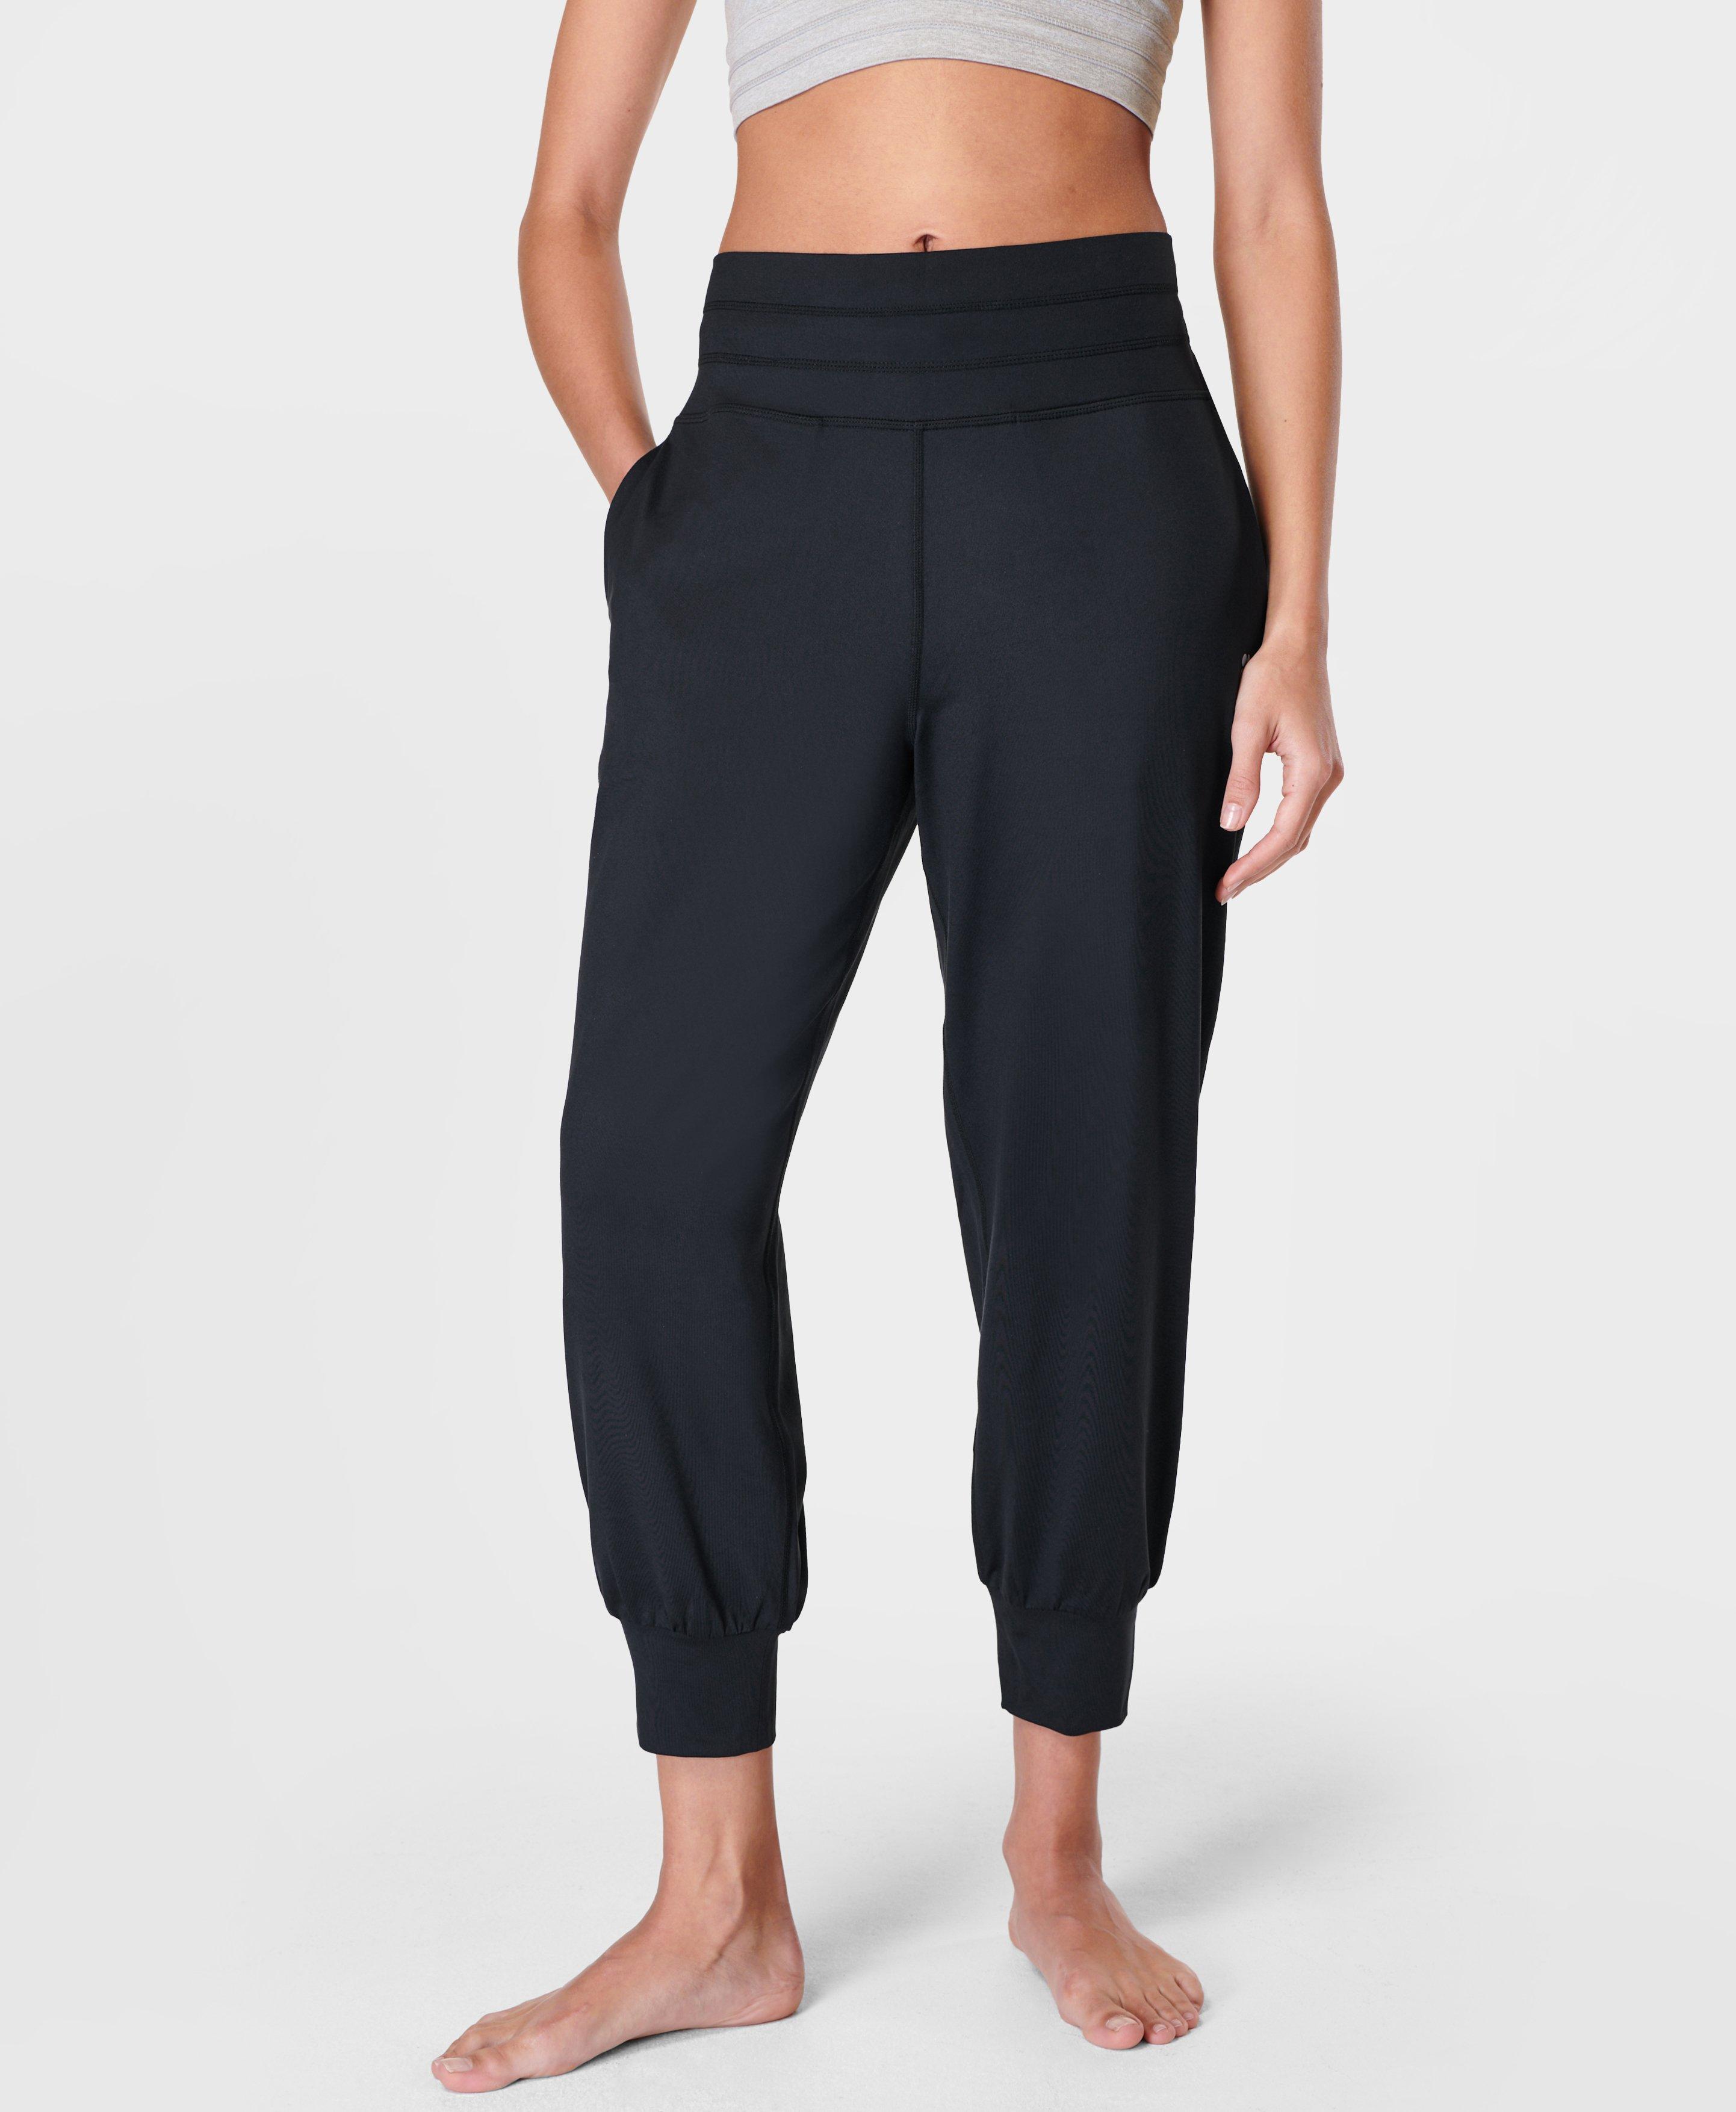 Apana Yoga Lifestyle Polyester Spandex Active Stetch Capri Black Pants  WOMEN'S S 739754631832 on eBid Canada